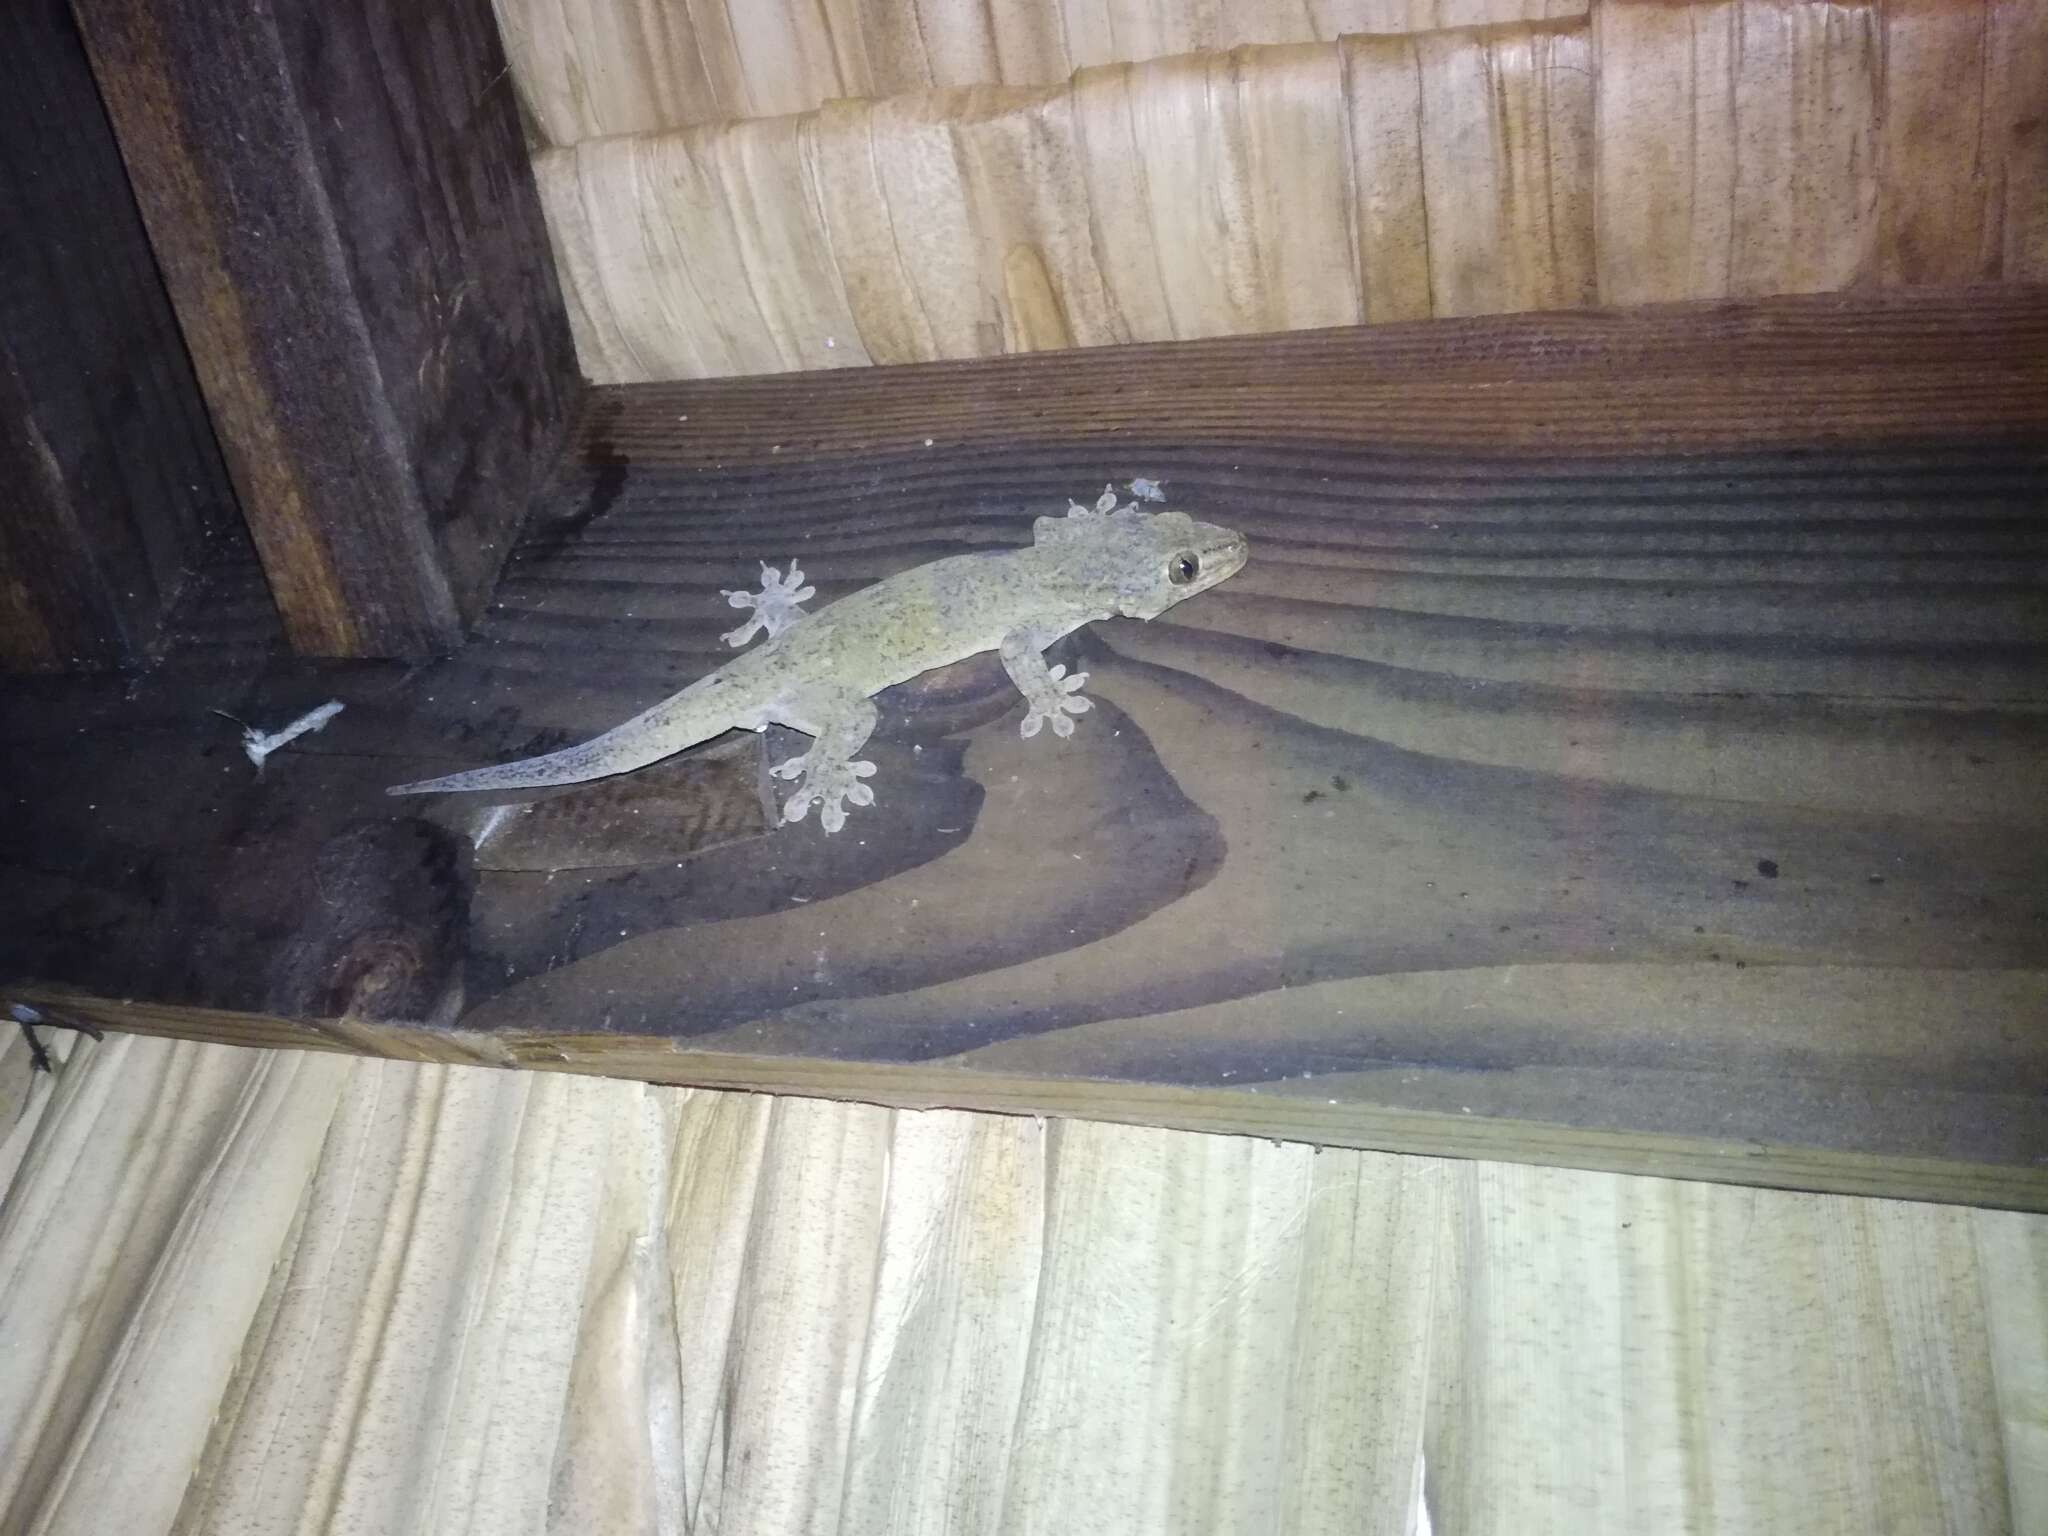 Image of Oceania Gecko